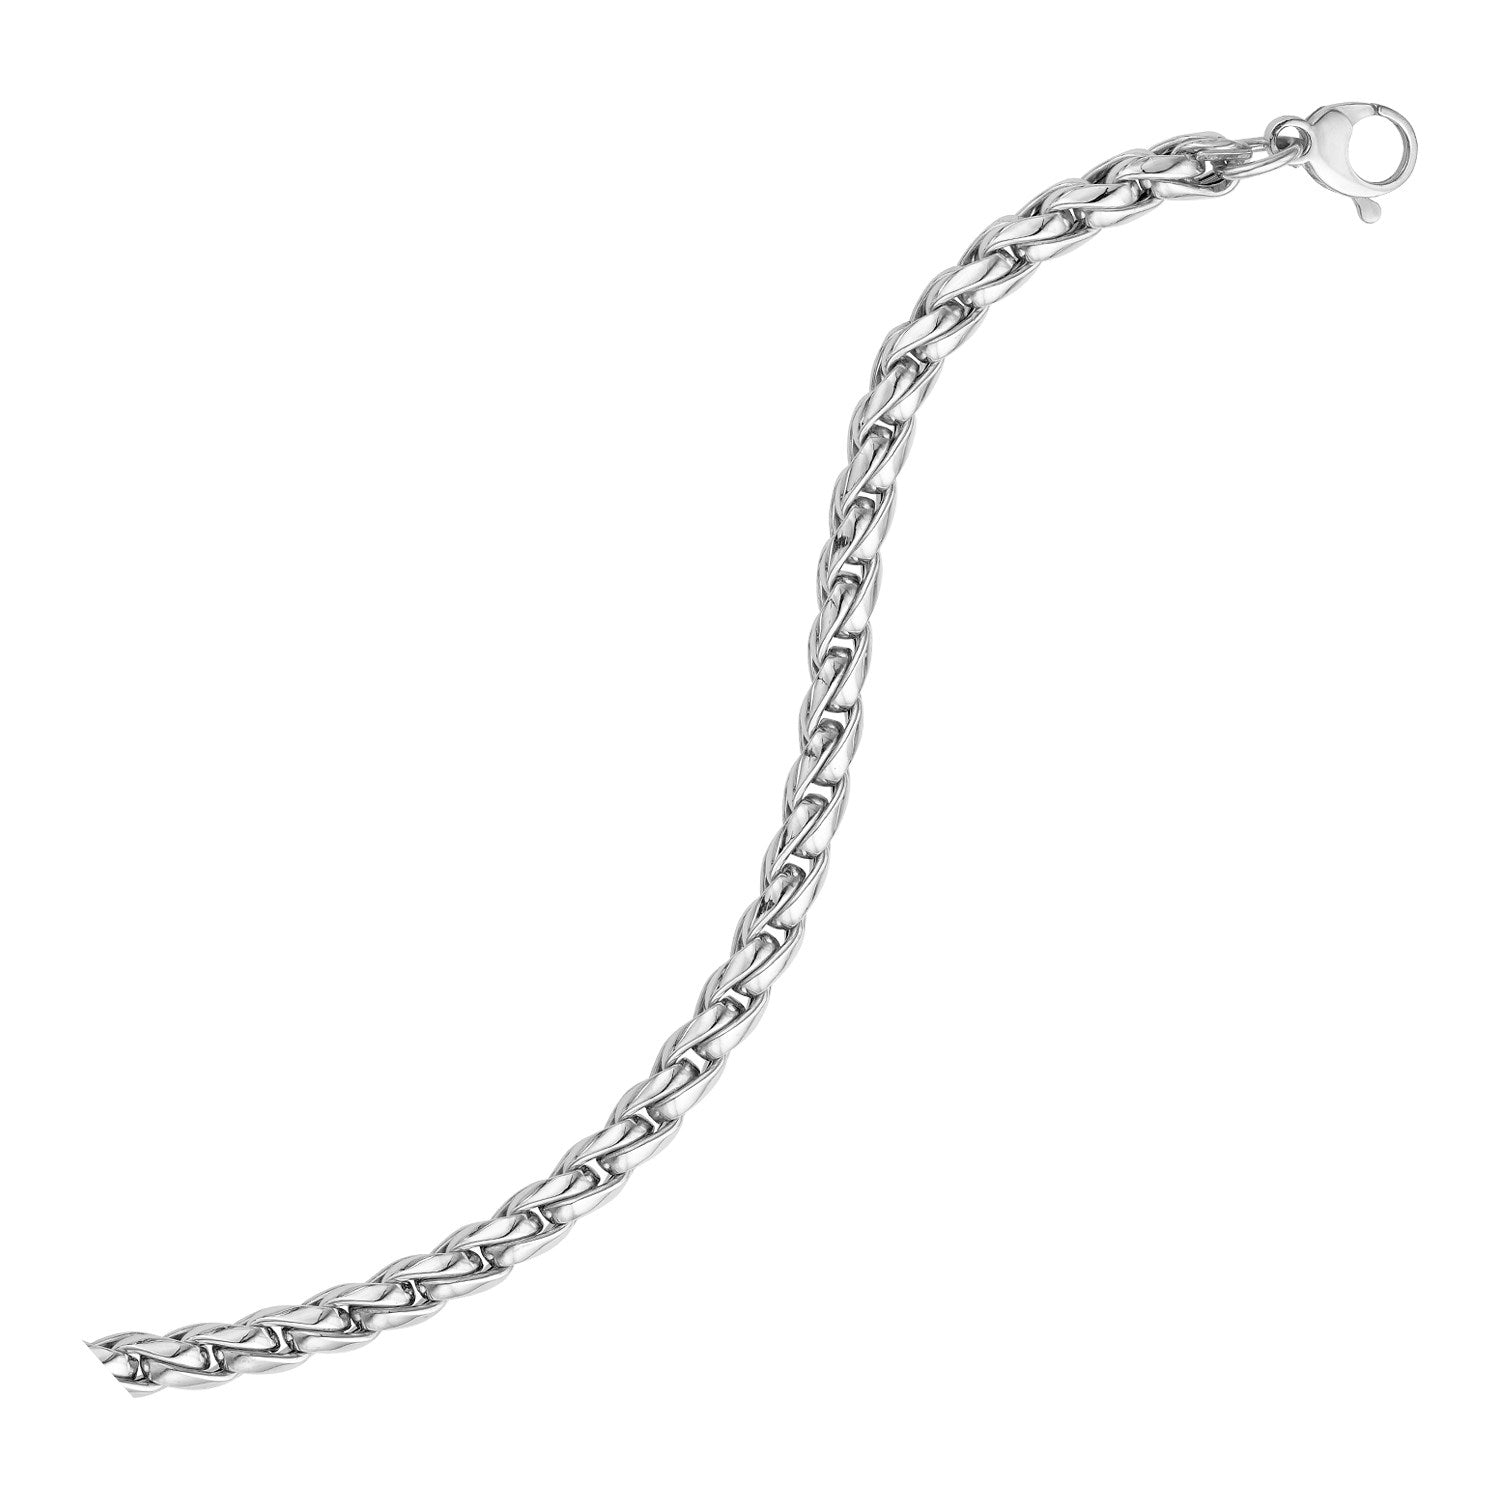 14k White Gold 7 1/2 inch Round Curb Chain Bracelet